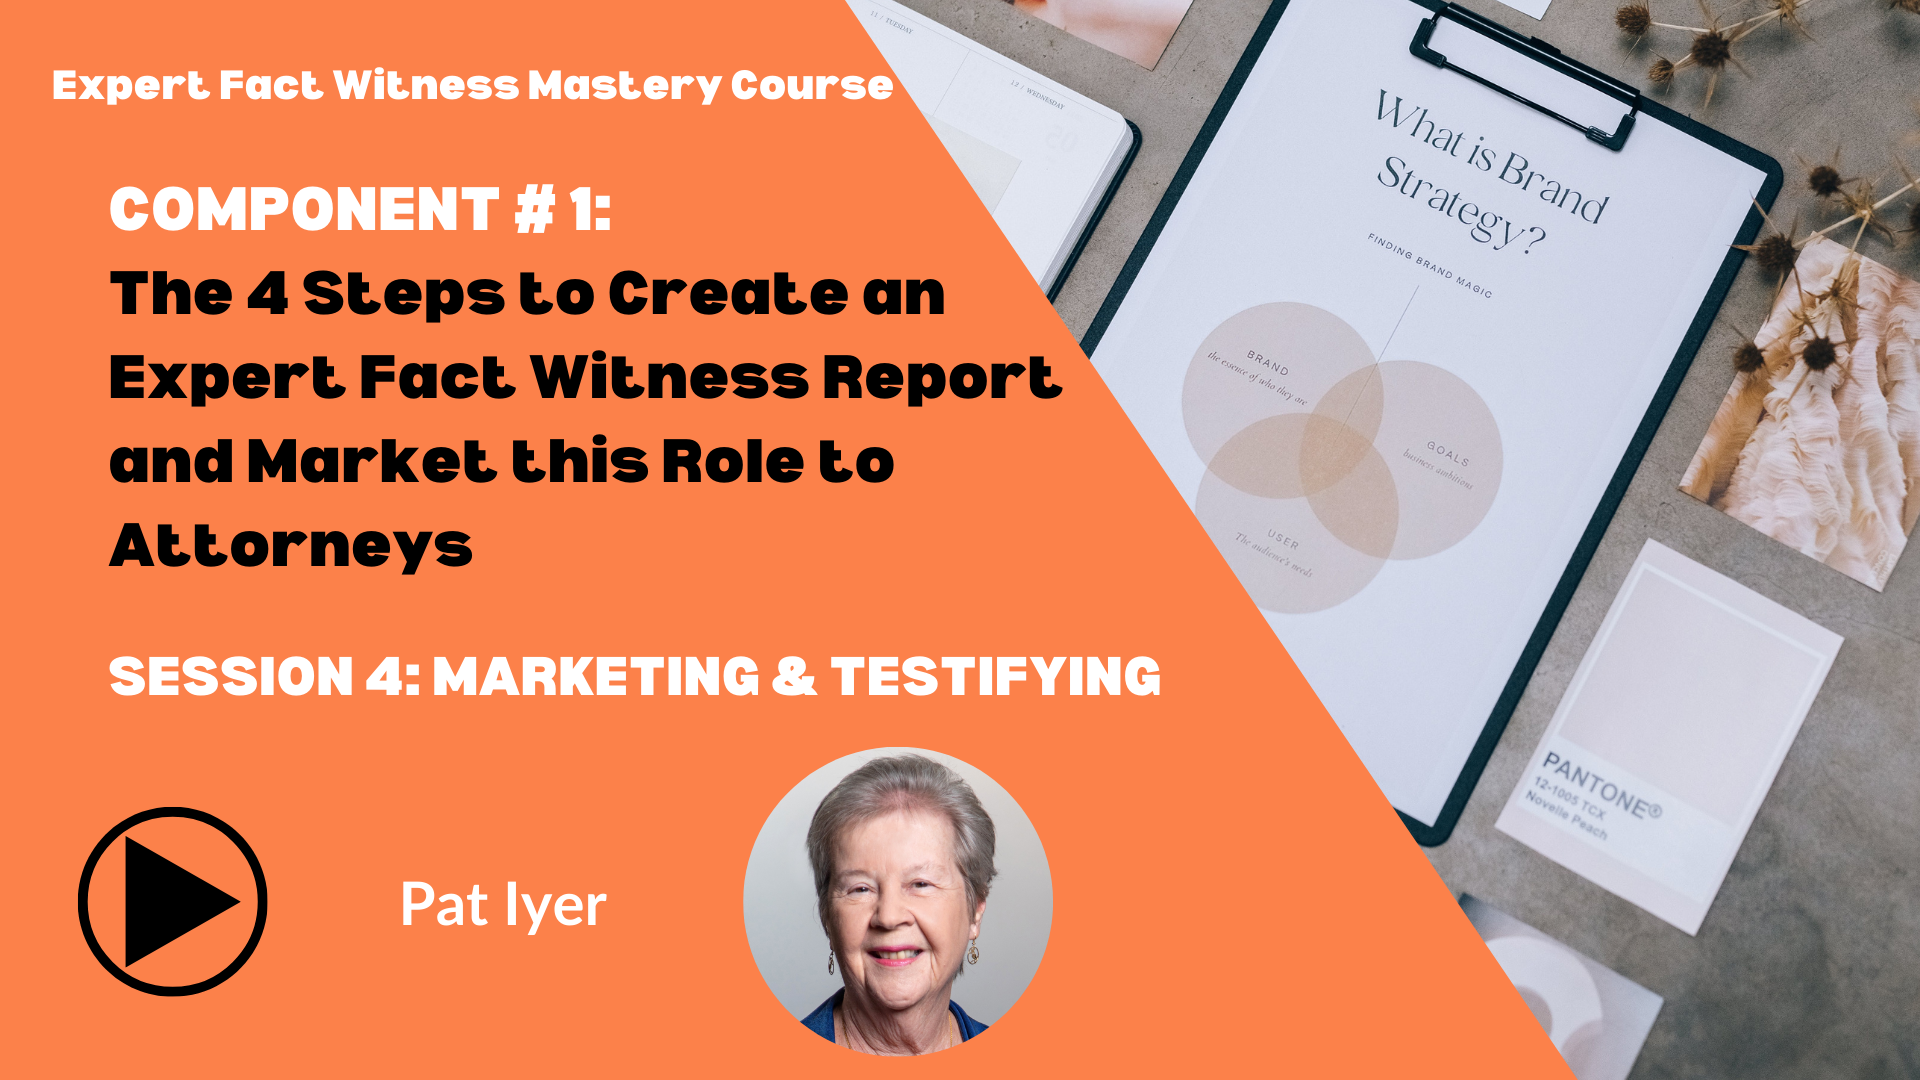 Pat Iyer - C1 Expert Fact Witness Mastery Marketing & Testifying